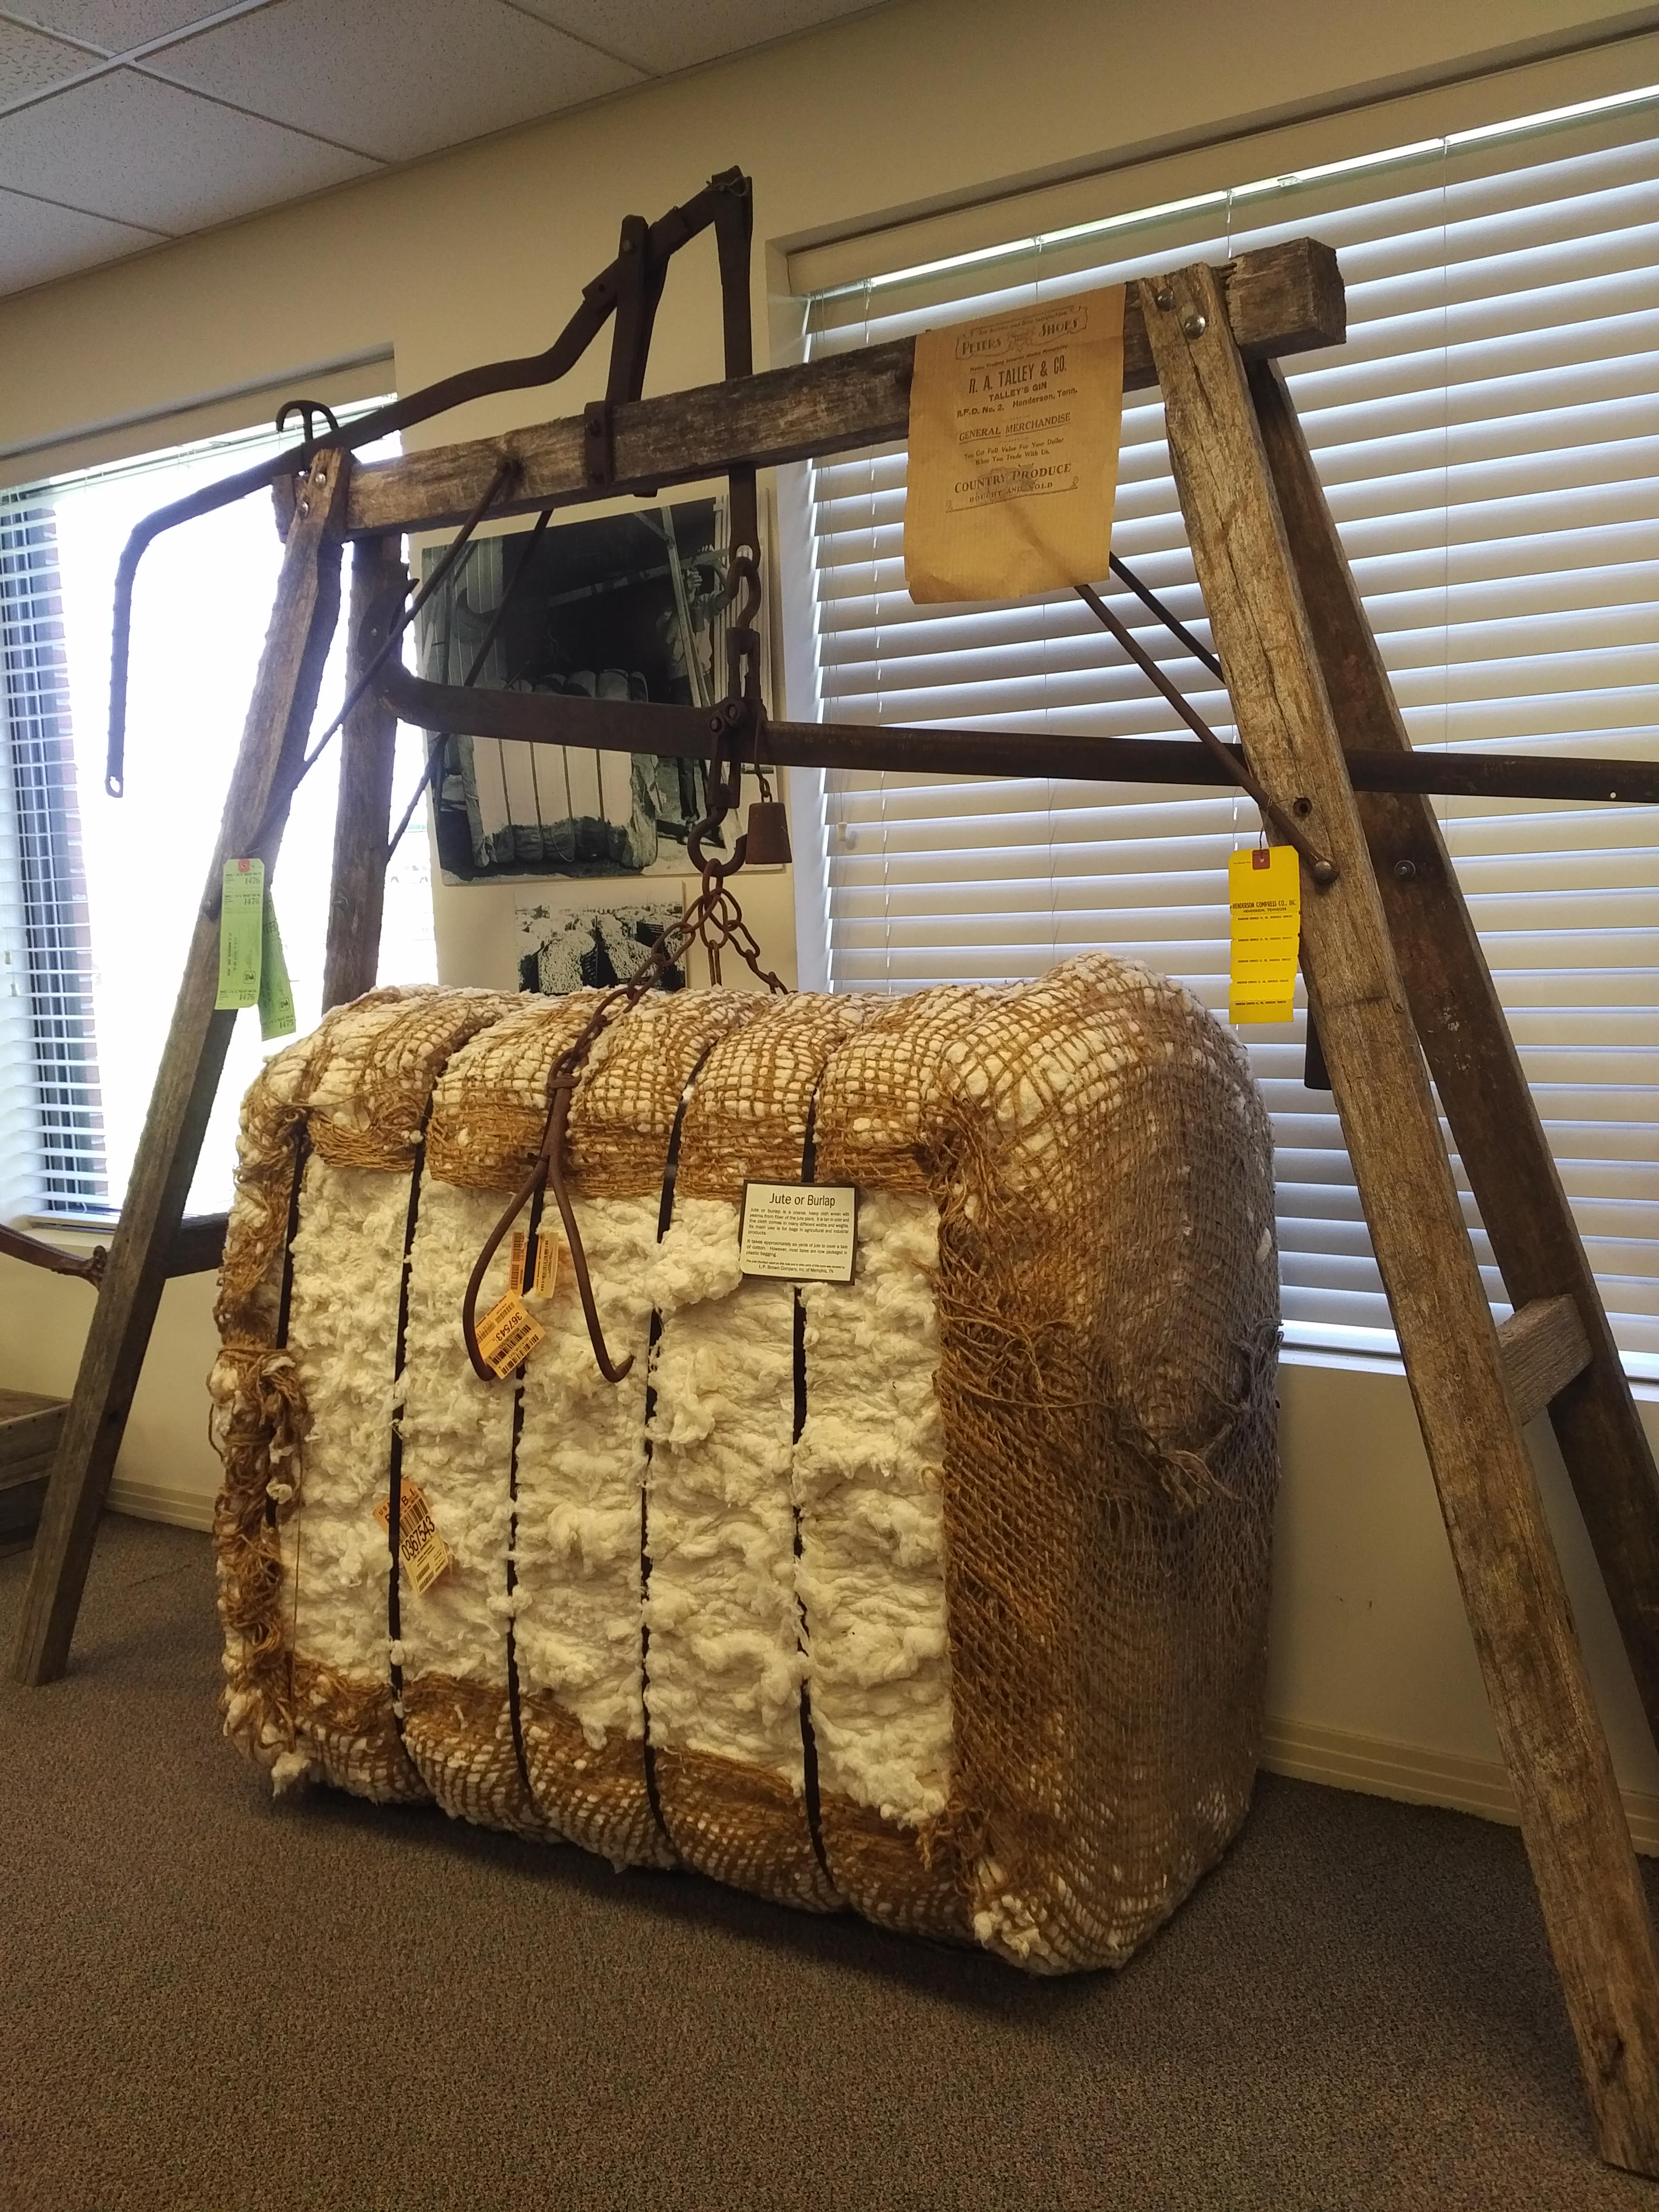 2018 TN Brownsville Delta Heritage Center Cotton Museum weigh bale of cotton